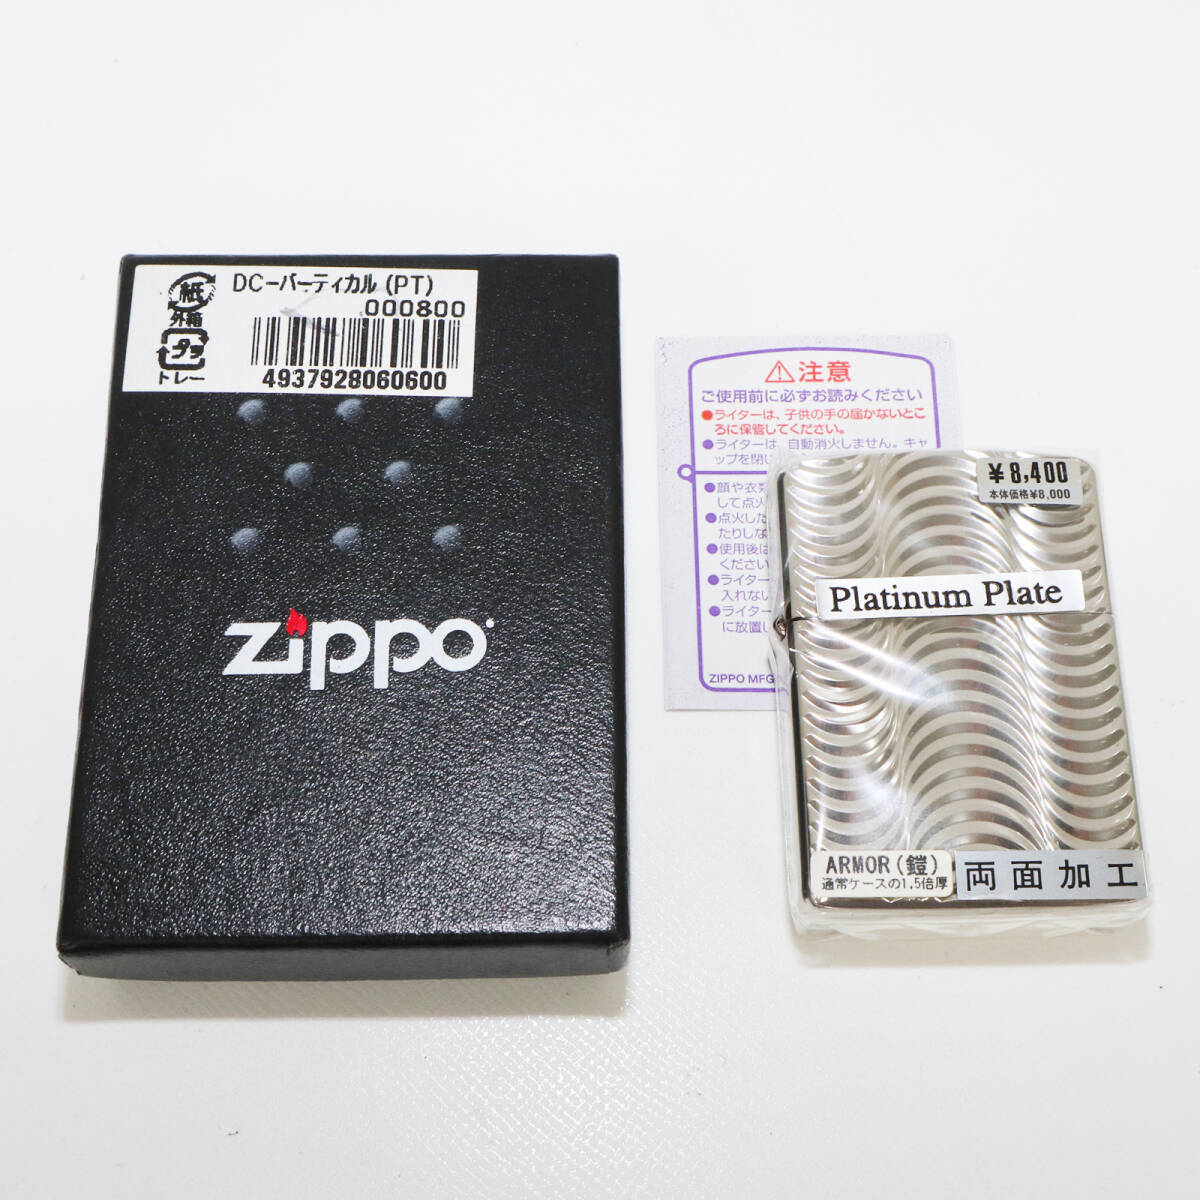 ZIPPO Platinam Plate Armor Case アーマー 両面特殊刻印 2006年製 A6138の画像4